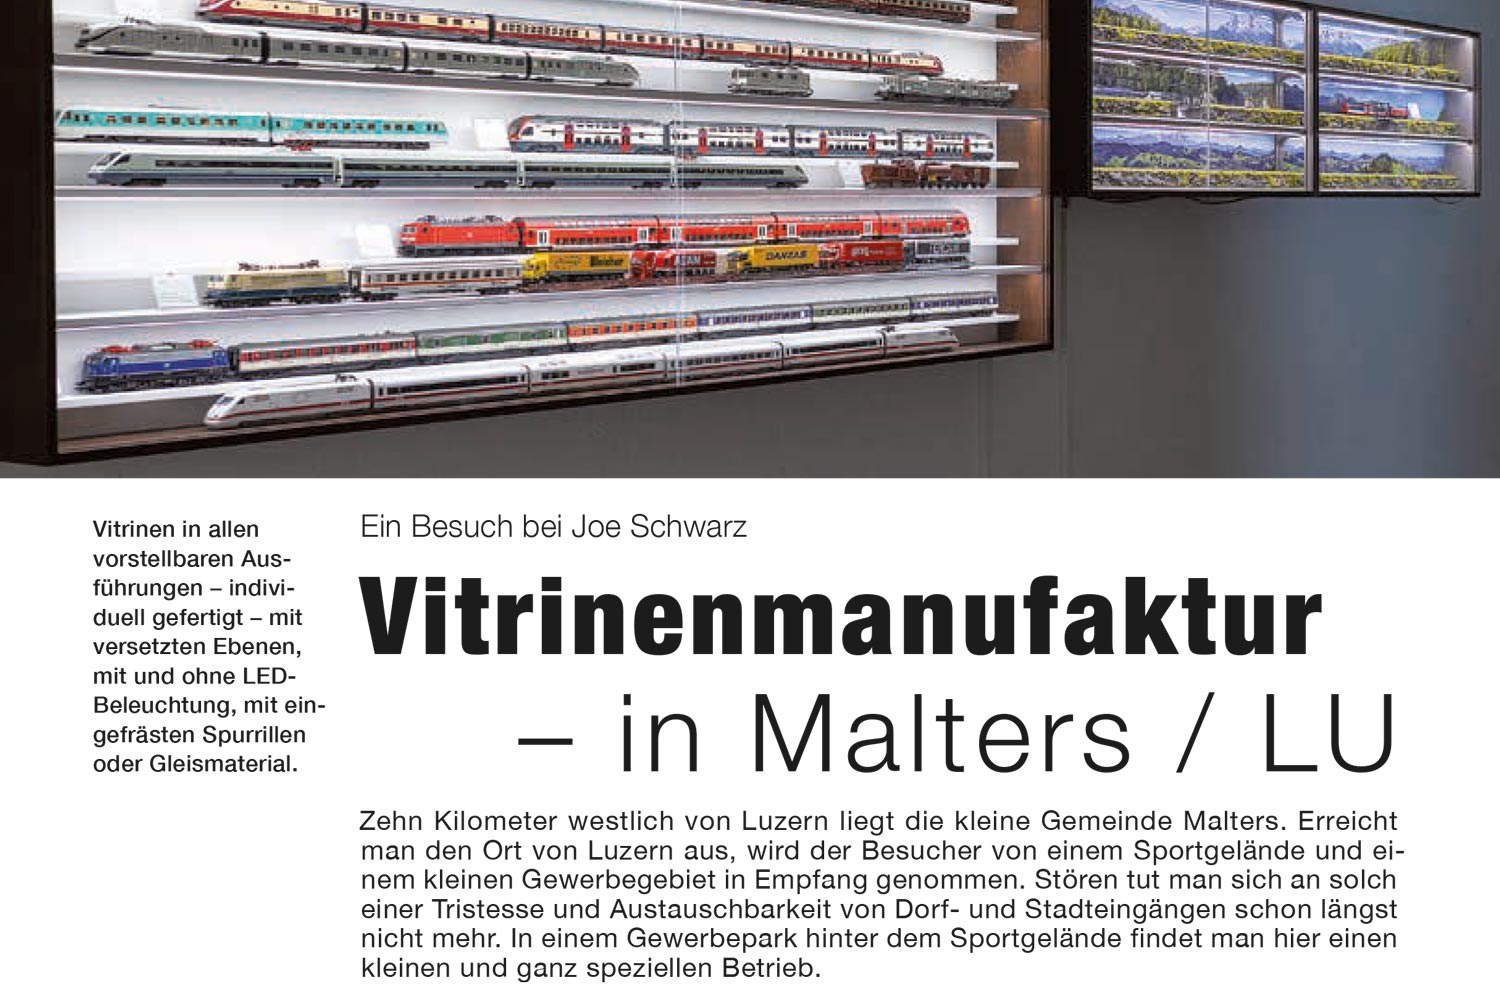 Vitrinenmanufaktur JS 1 ModellbahnSchweiz - Joe Schwarz Vitrinenmanufaktur in der Modellbahn Schweiz 12/2021